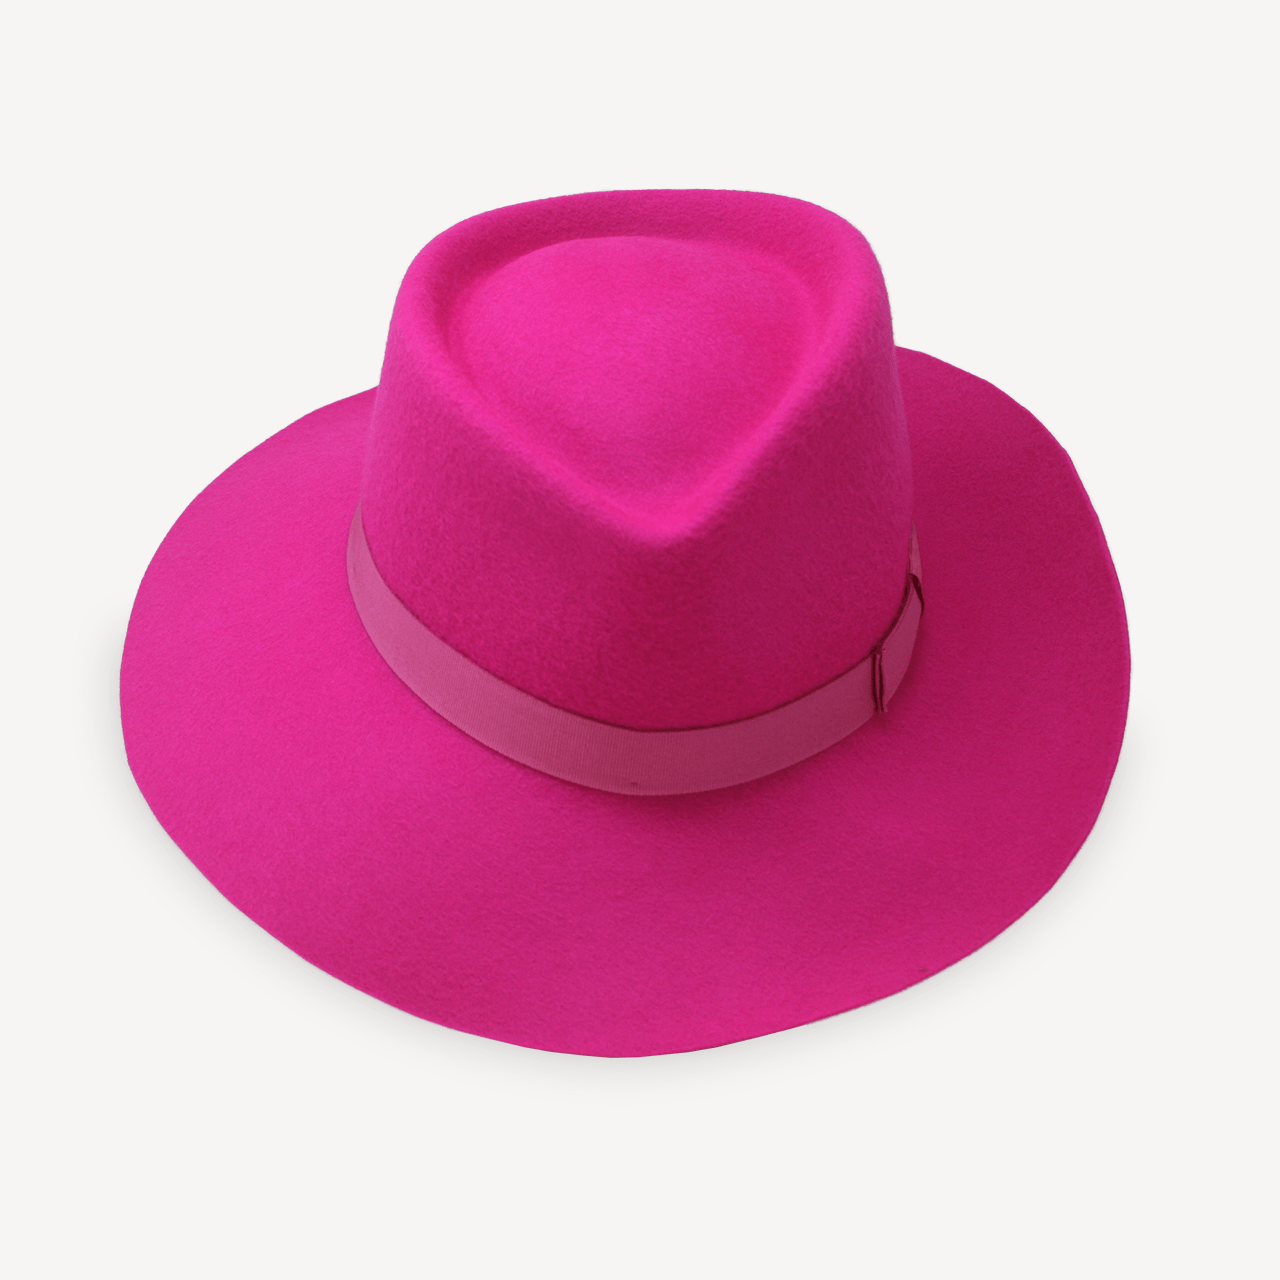 Quaintrelle - Hot Pink Merino - Swaine